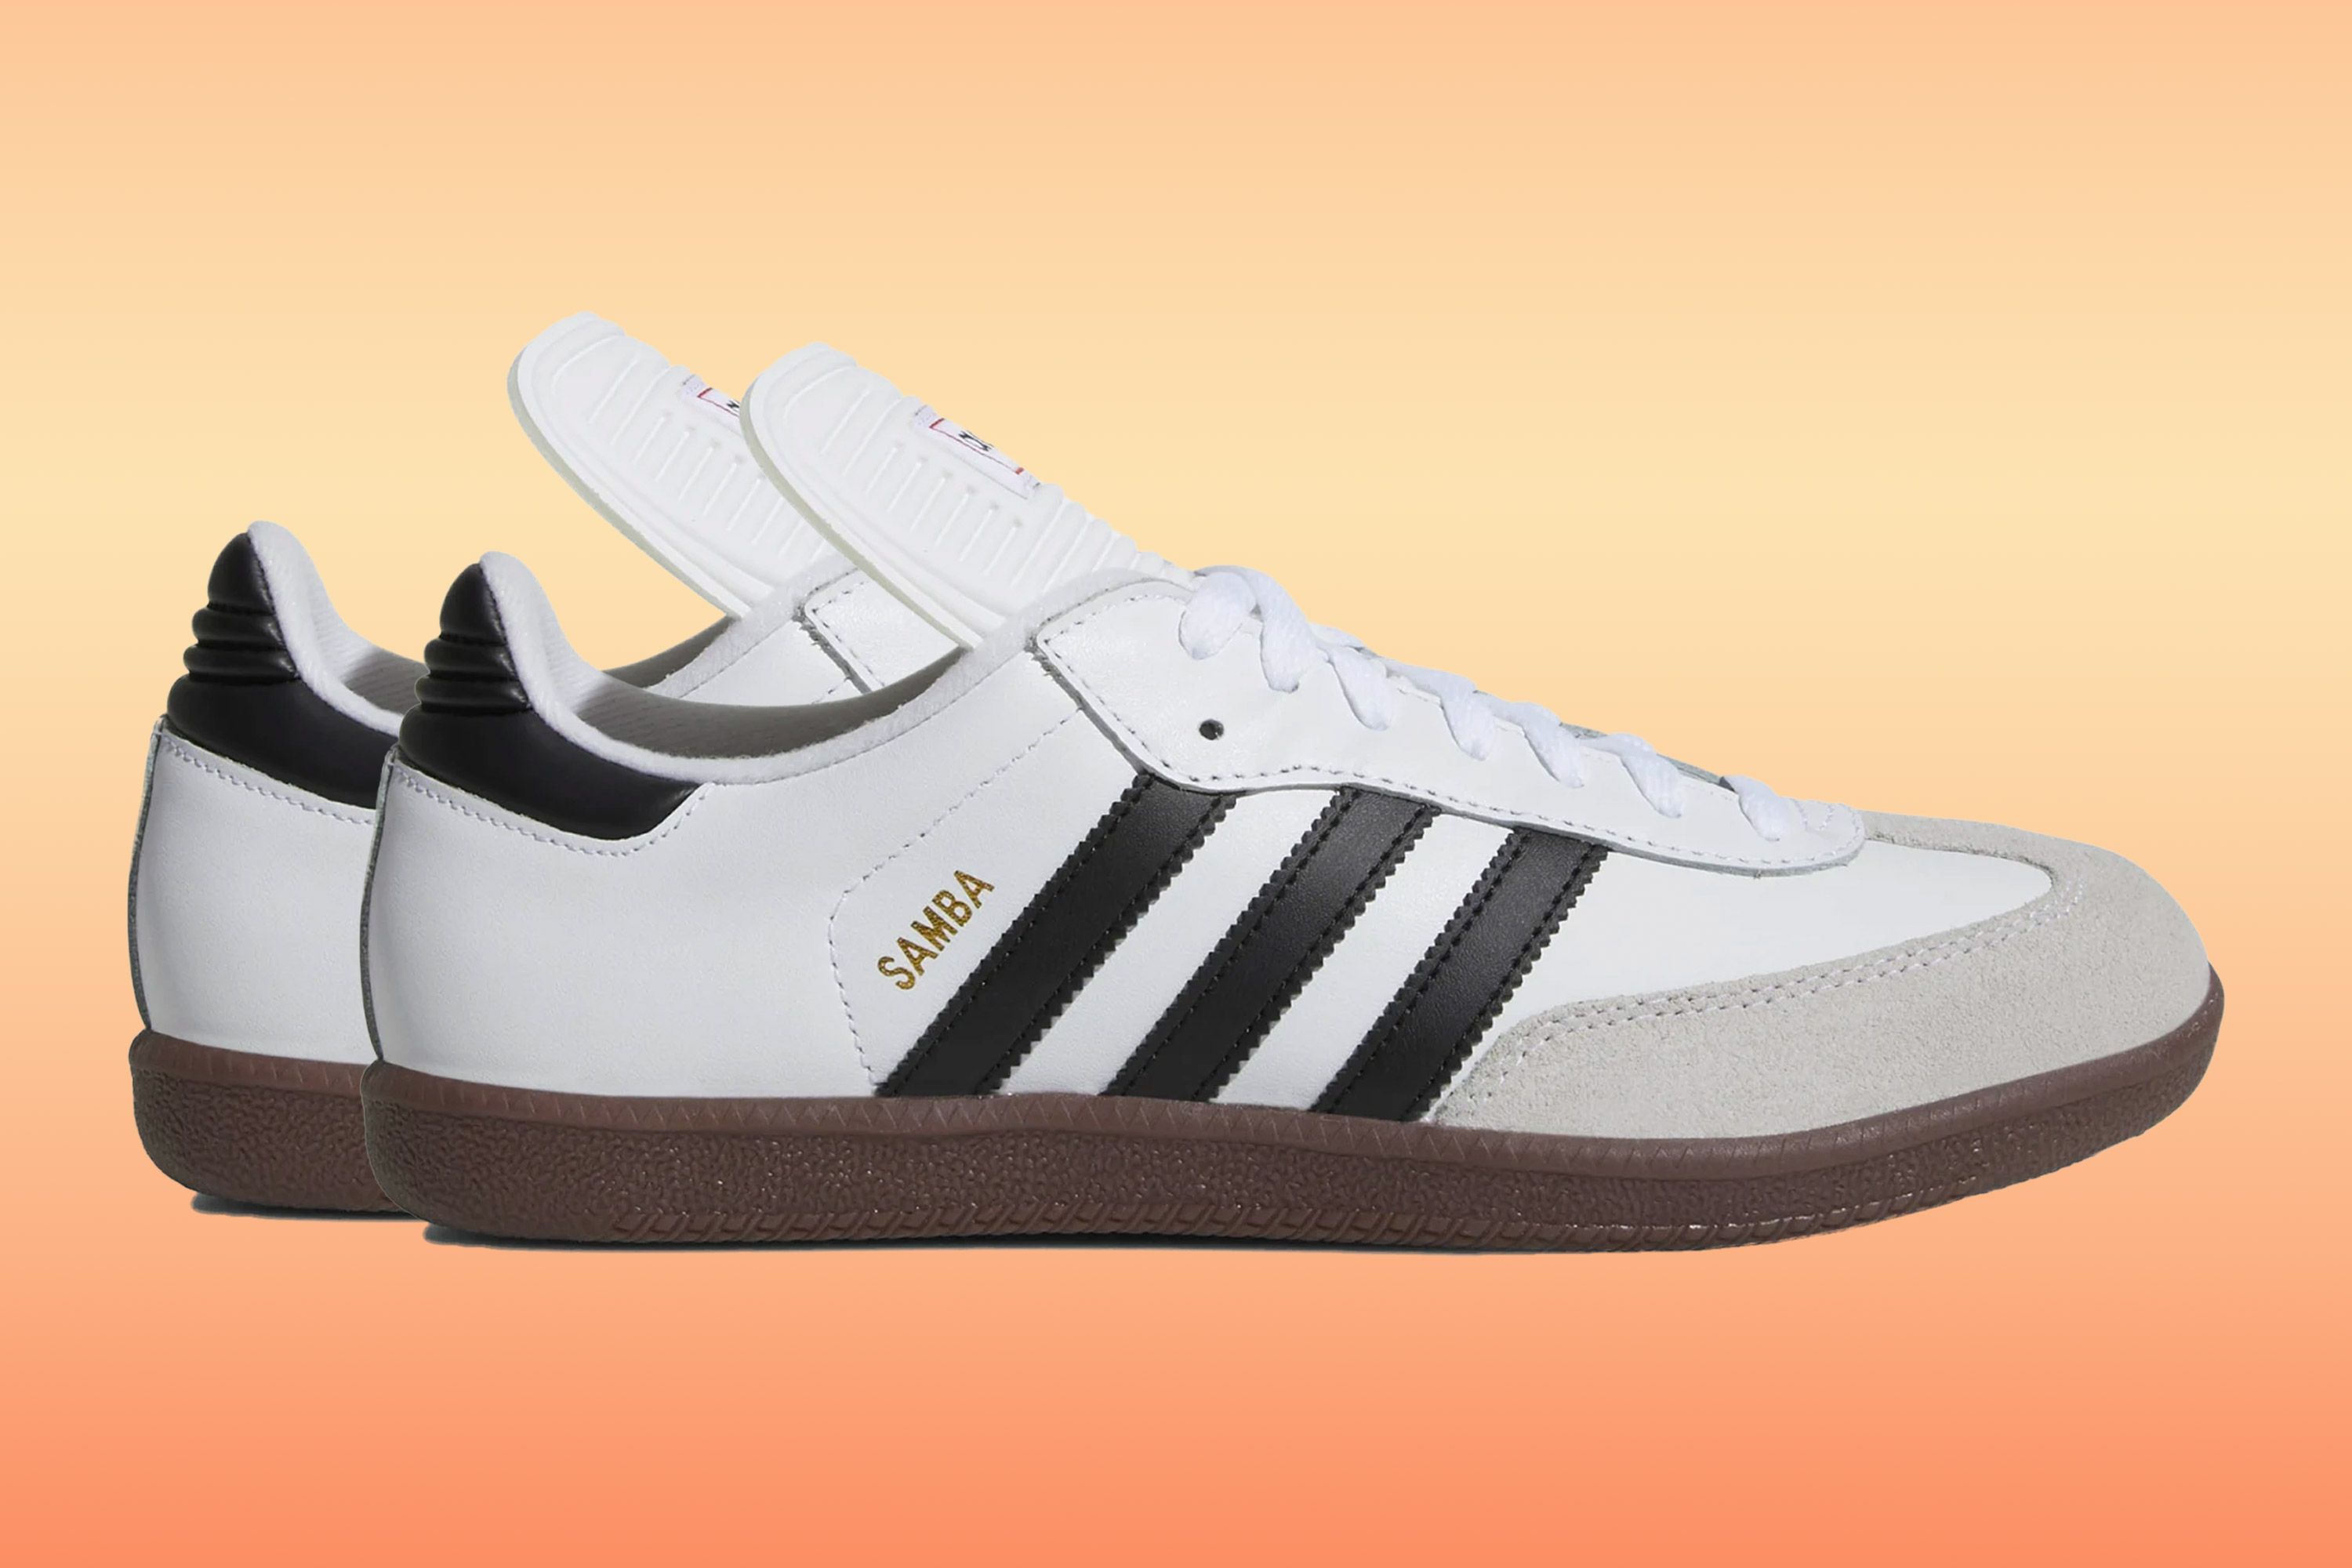 Systematisch hoffelijkheid meubilair The Adidas Samba Is Still the "It" Sneaker. Here's Why